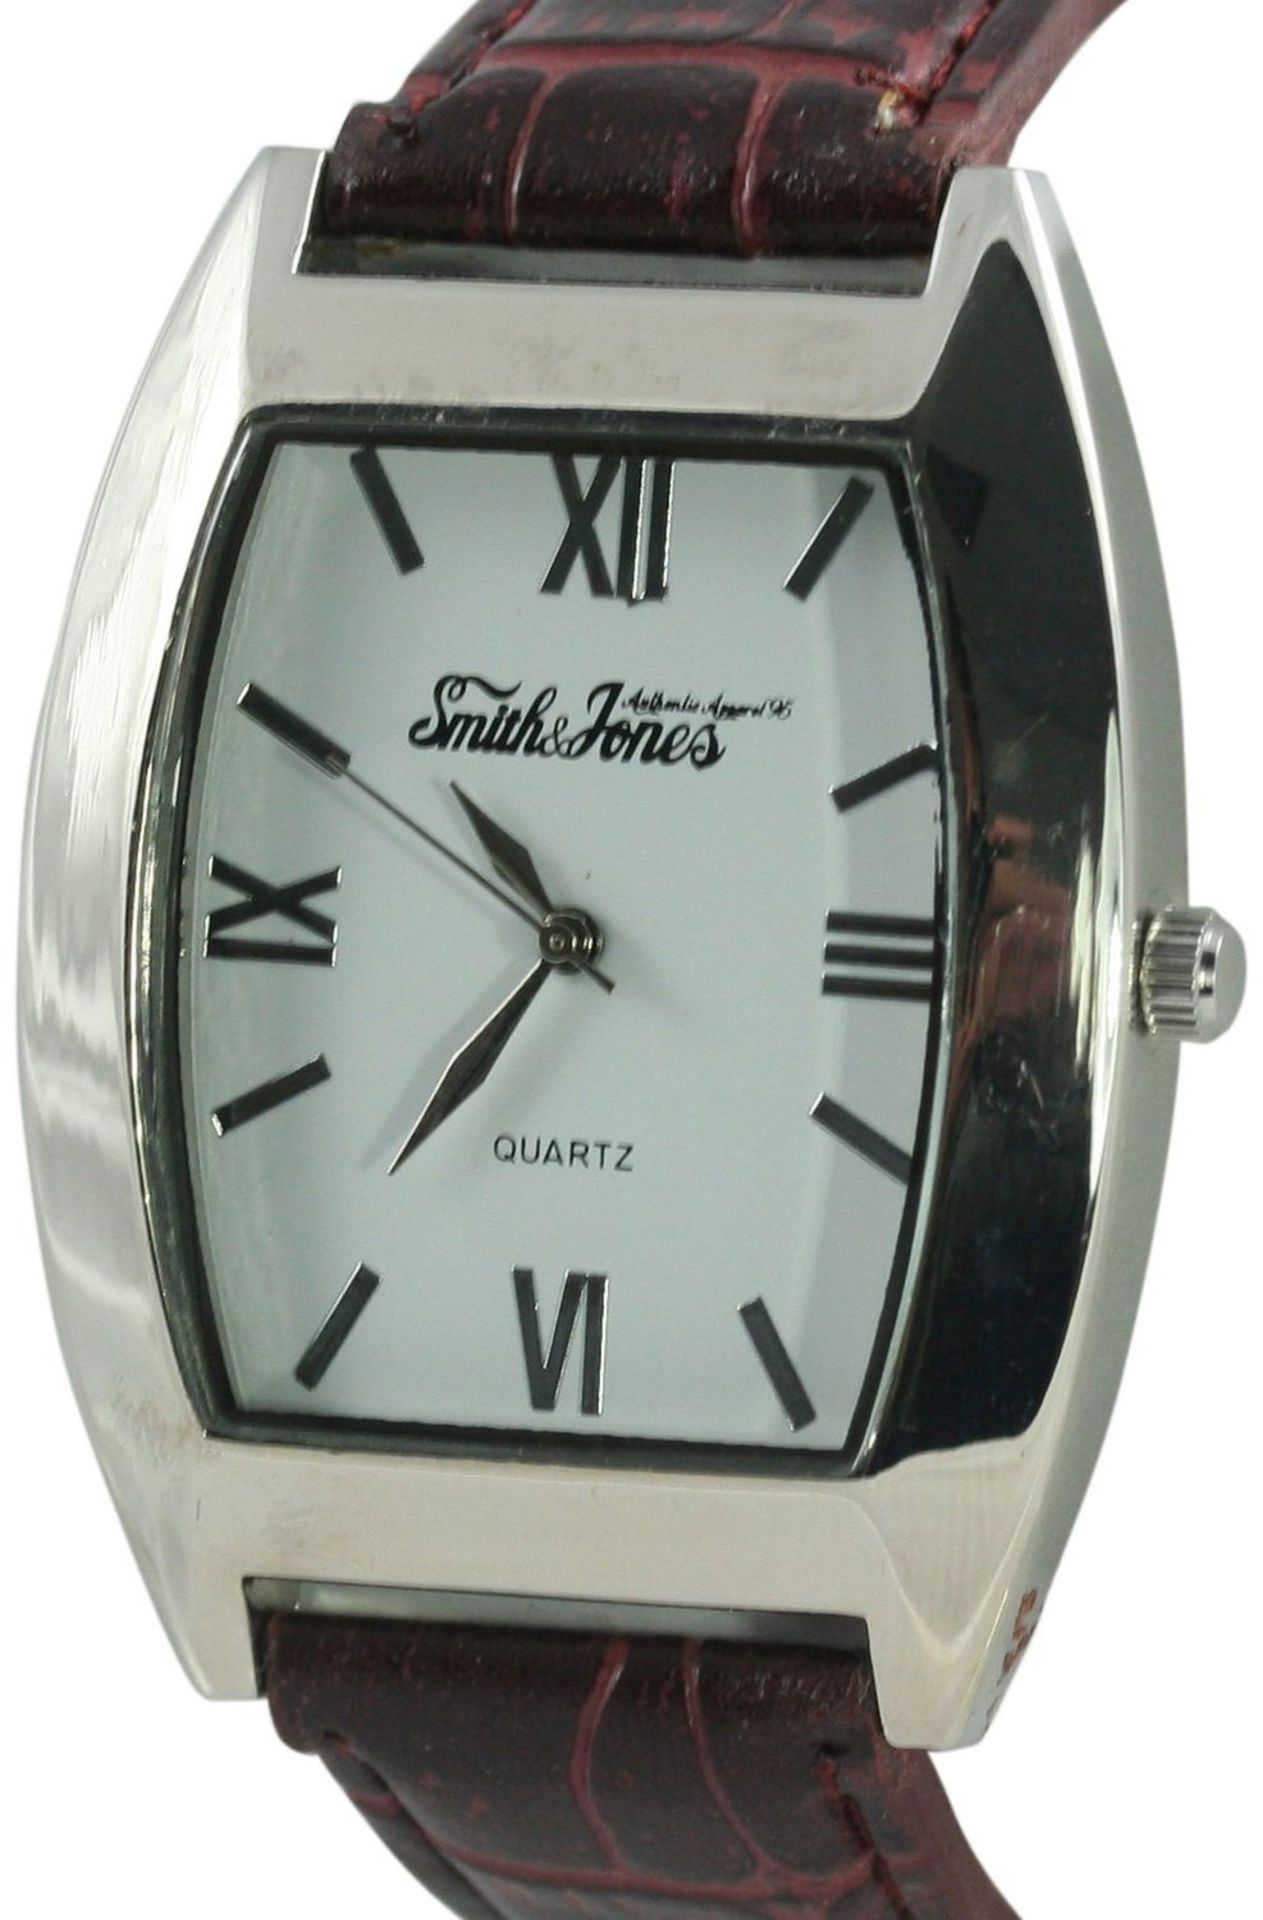 V Gents Smith & Jones Quartz Watch - Brown Strap